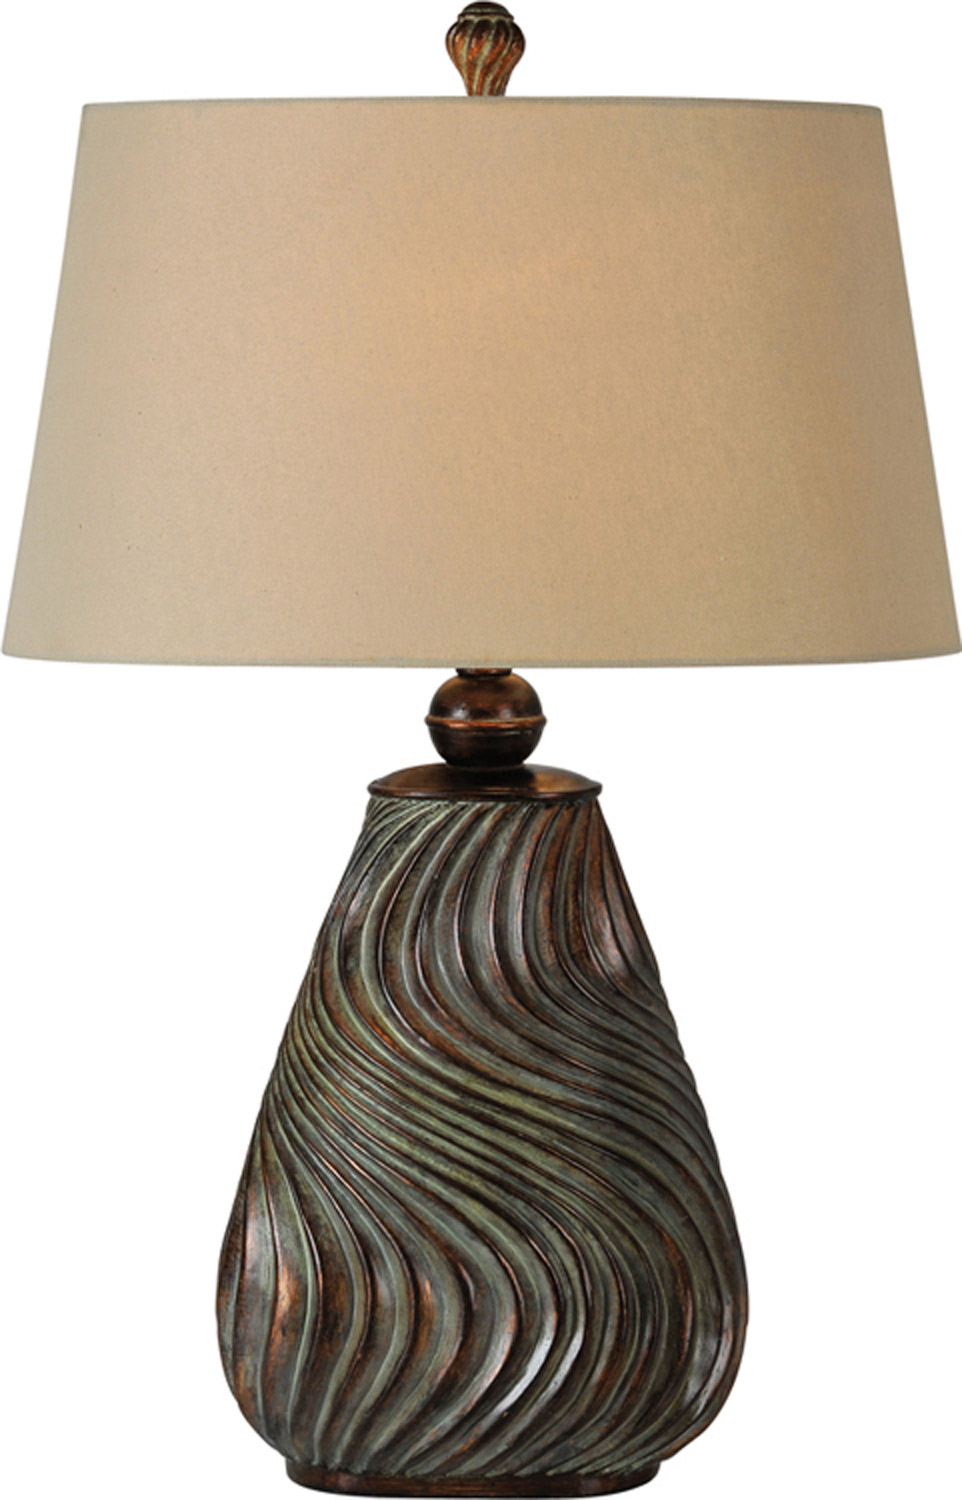 Ren-Wil LPT263 Table Lamp